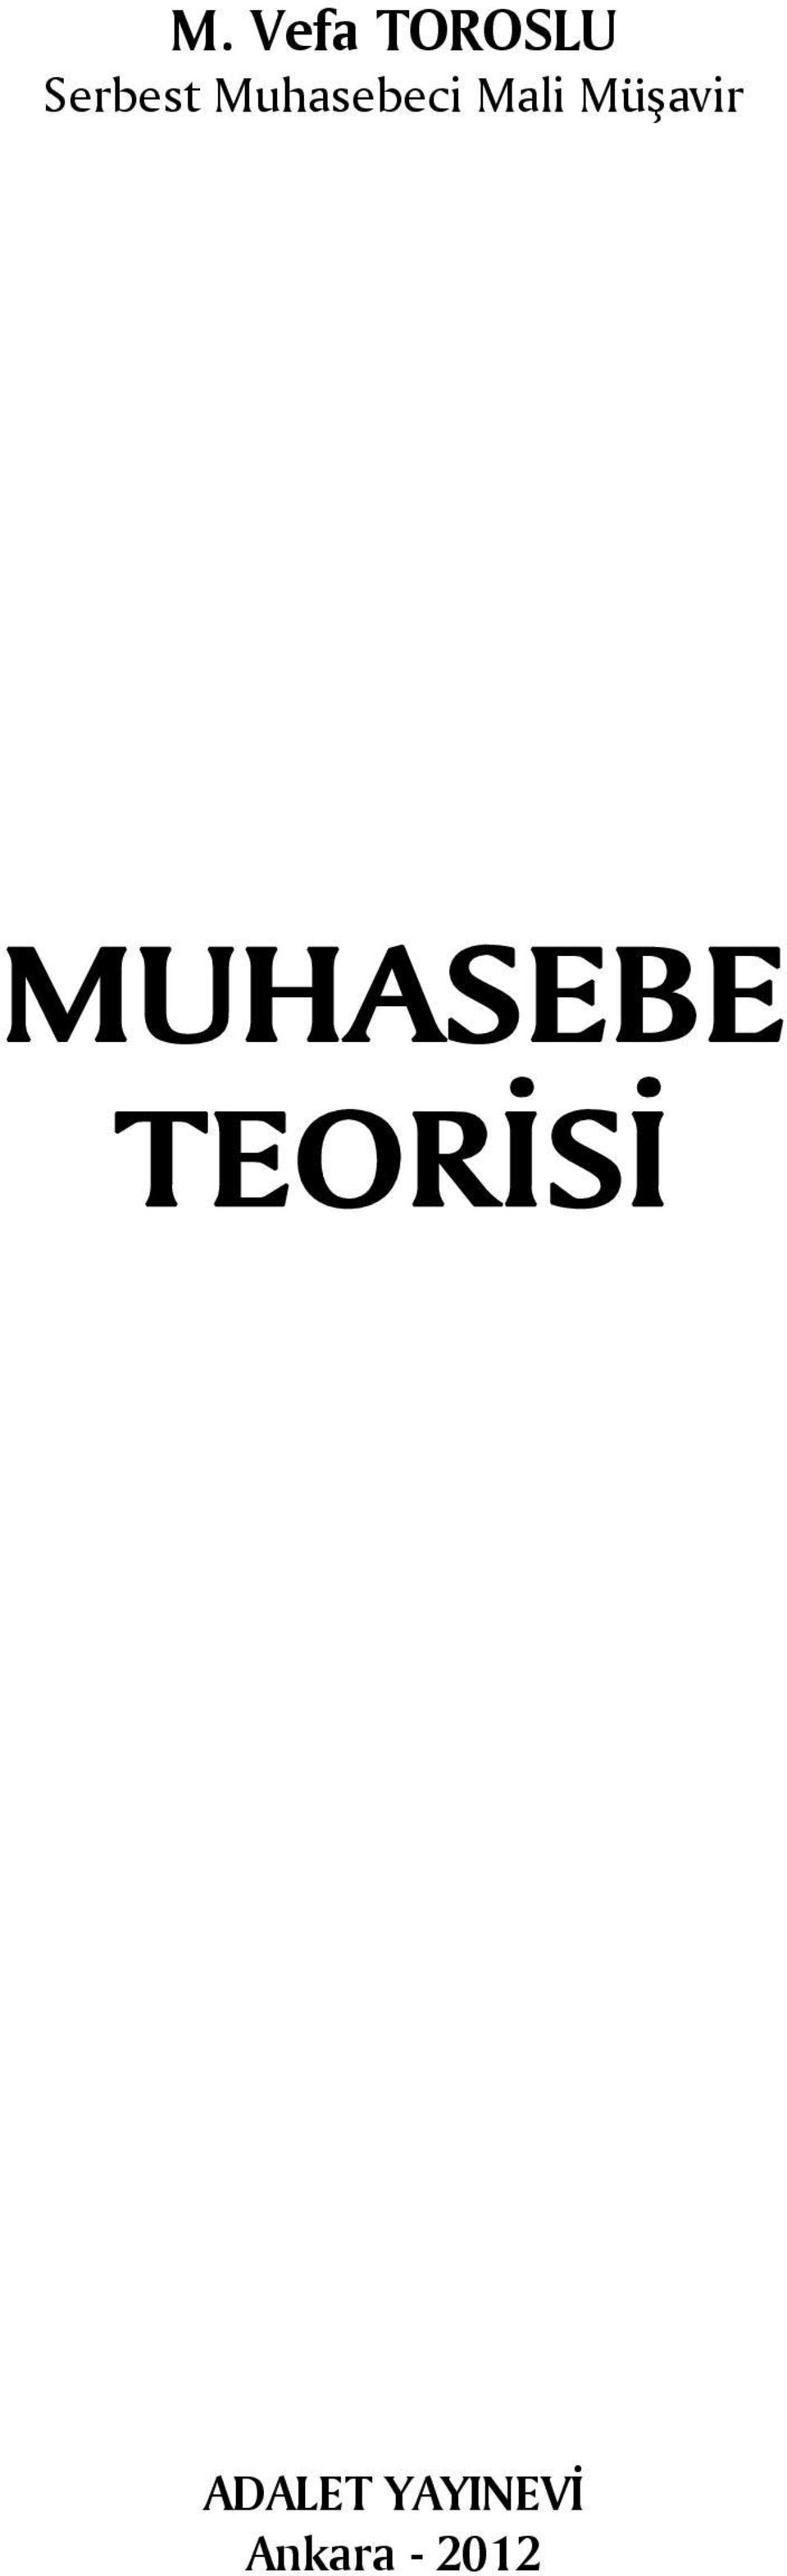 MUHASEBE TEORİSİ ADALET